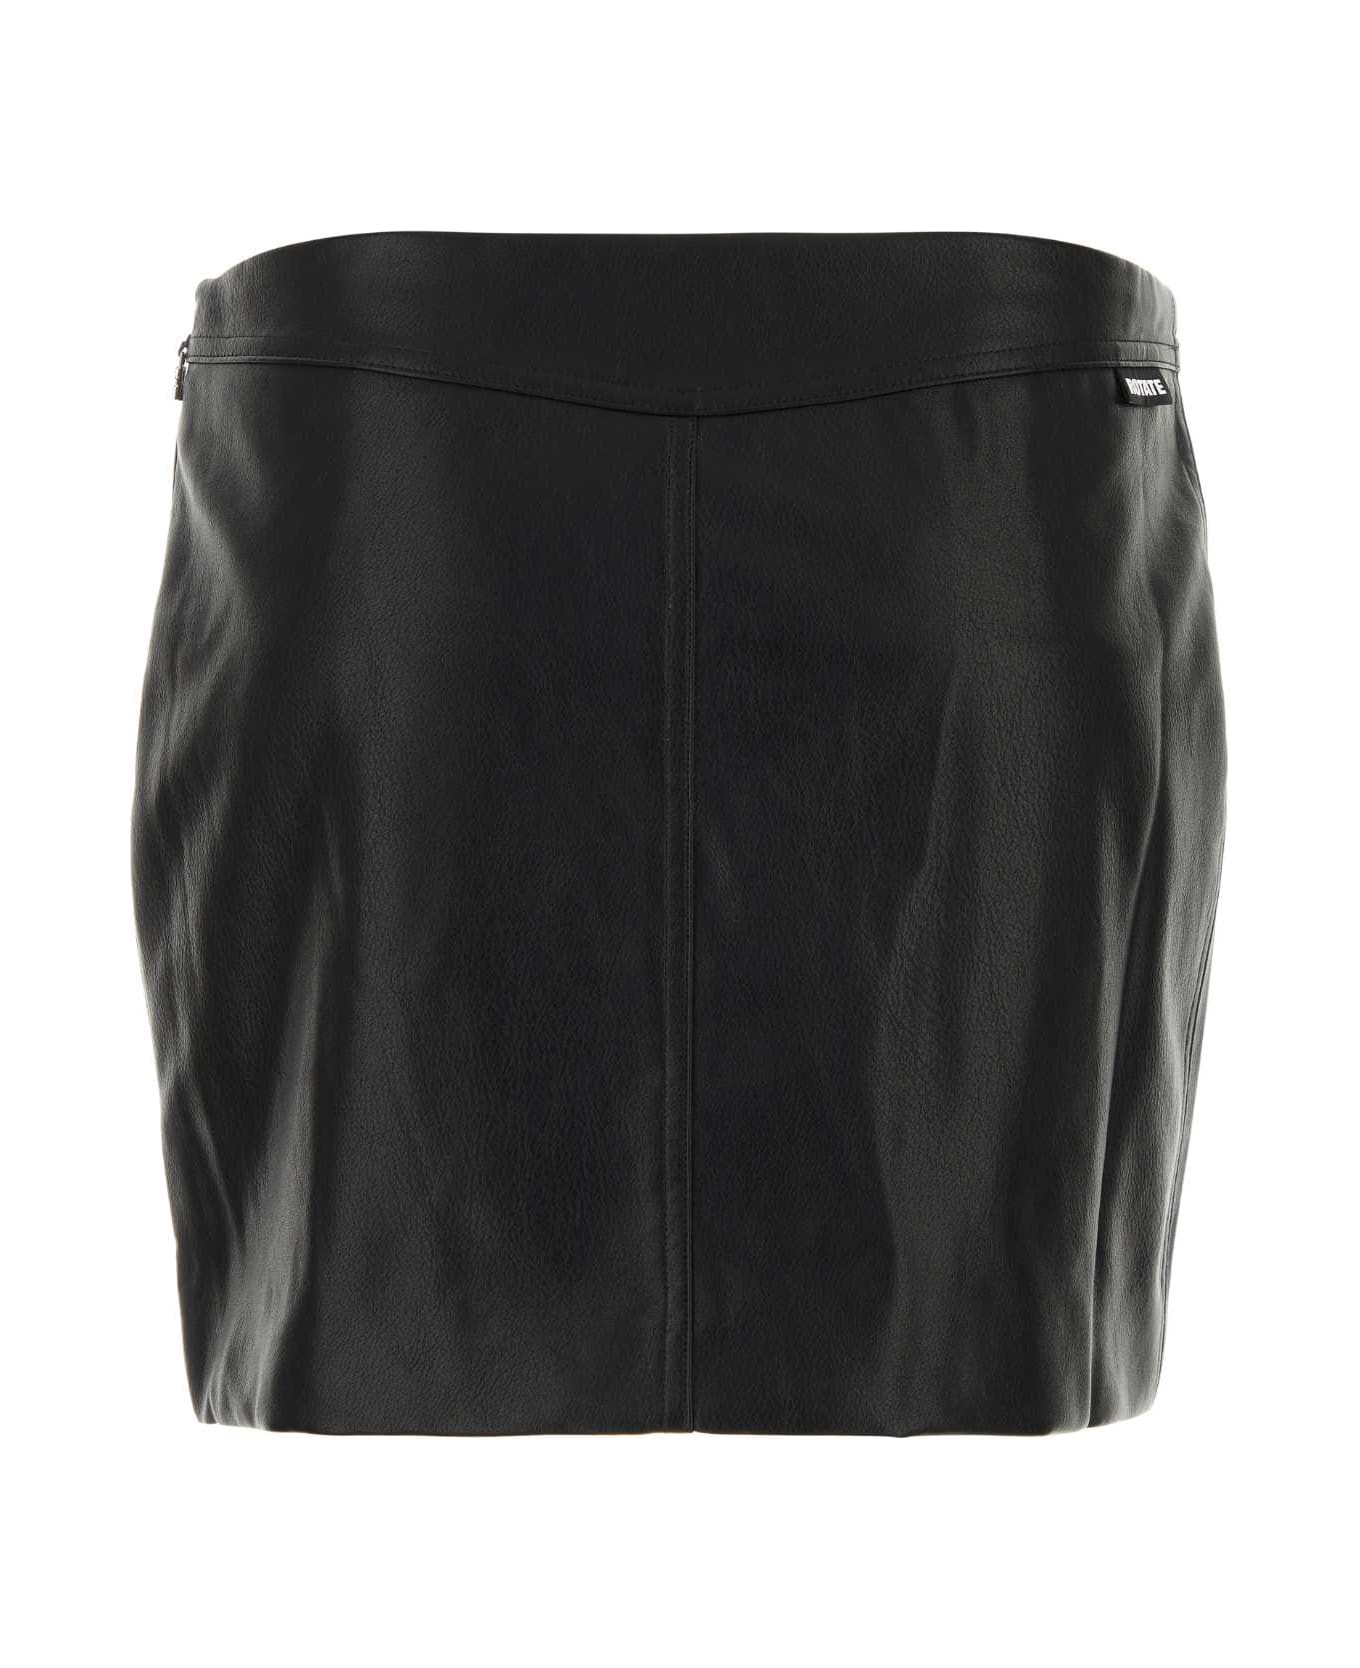 Rotate by Birger Christensen Black Synthetic Leather Mini Skirt - BLACK